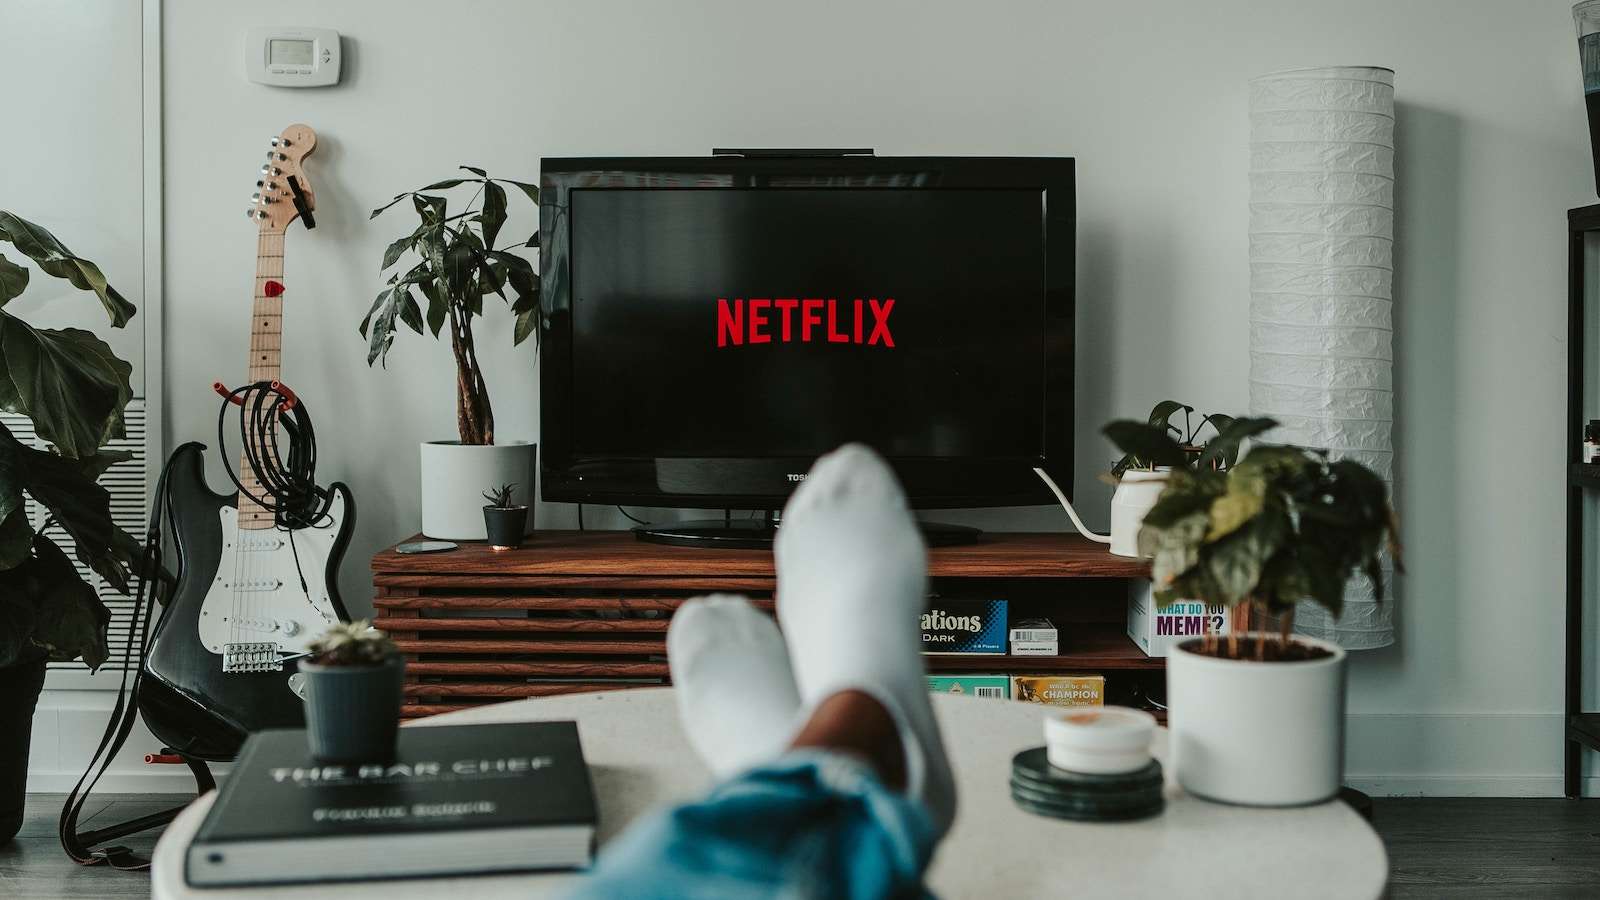 Stock image of man watching Netflix